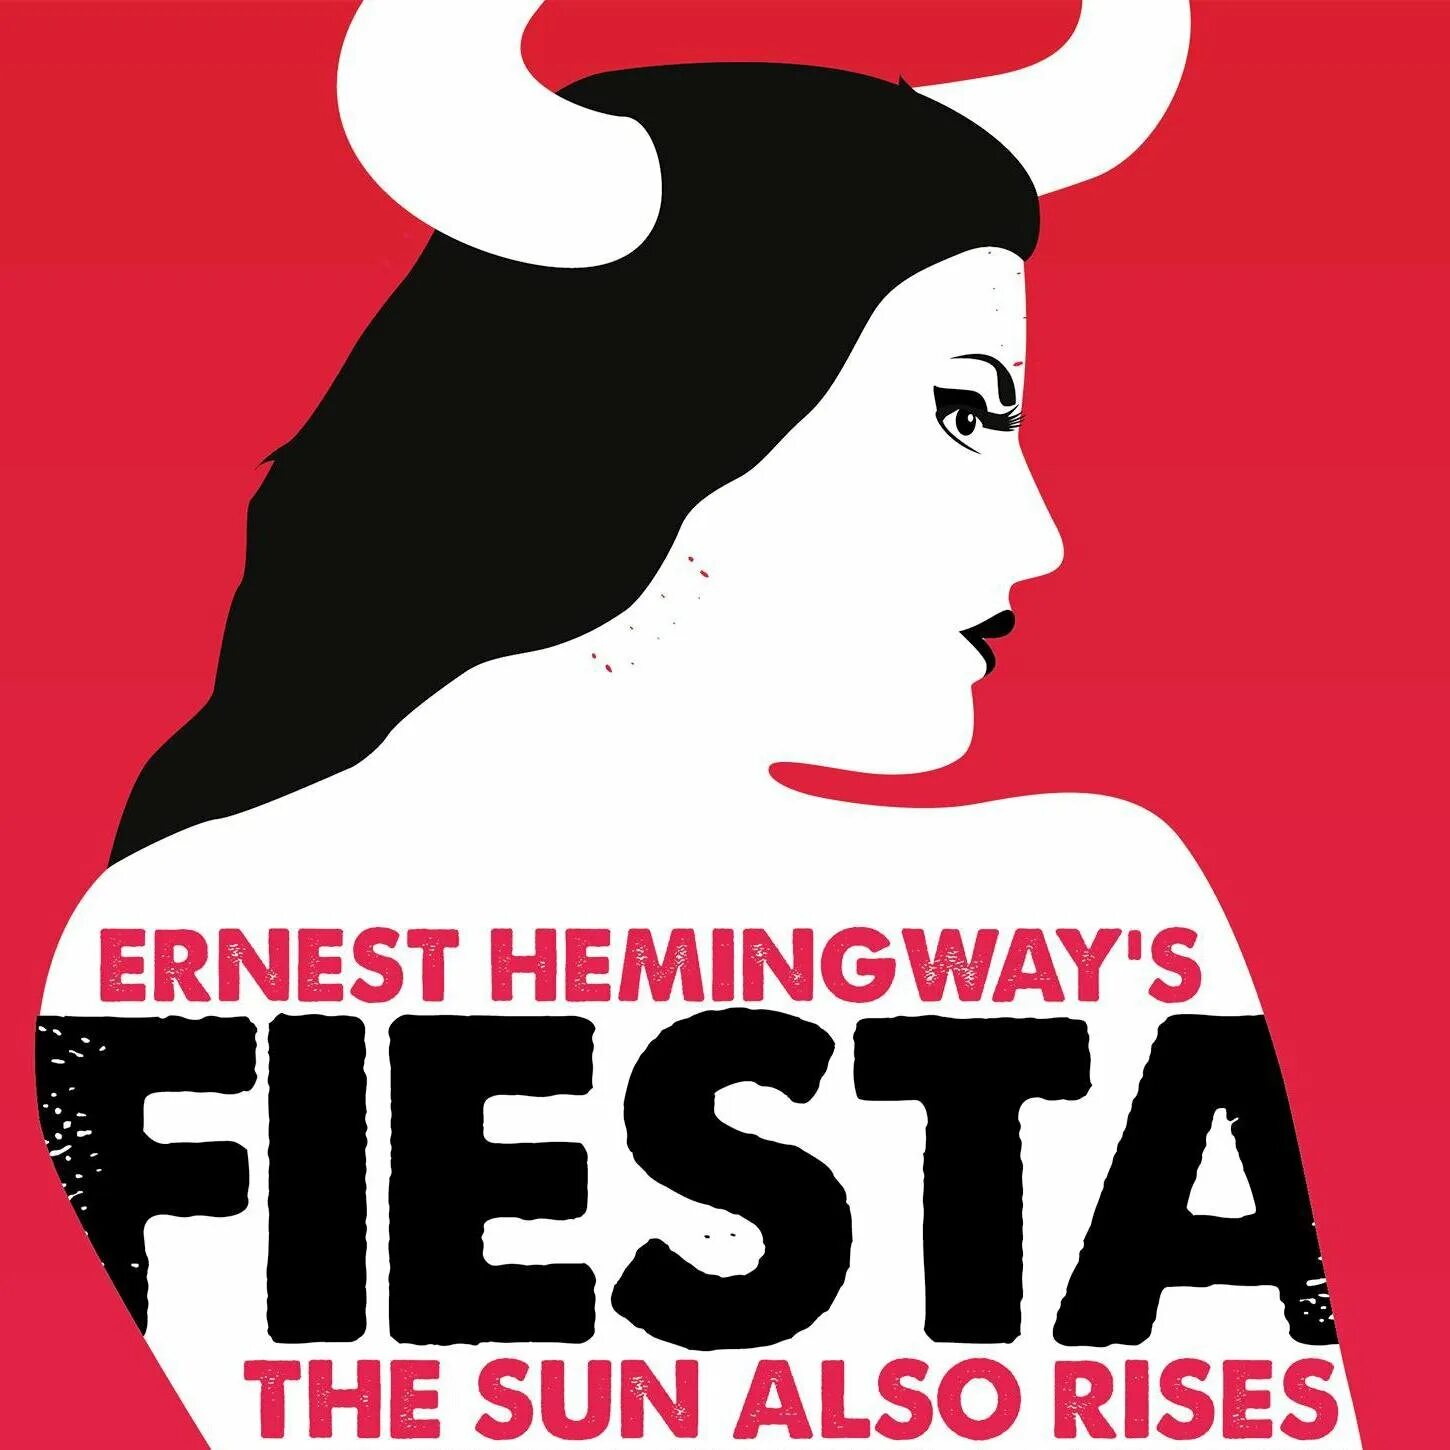 The Sun also Rises Хемингуэй. Фиеста Хемингуэй экранизация. Фиеста Хемингуэй иллюстрации. The Sun also Rises by Ernest Hemingway. Also rises